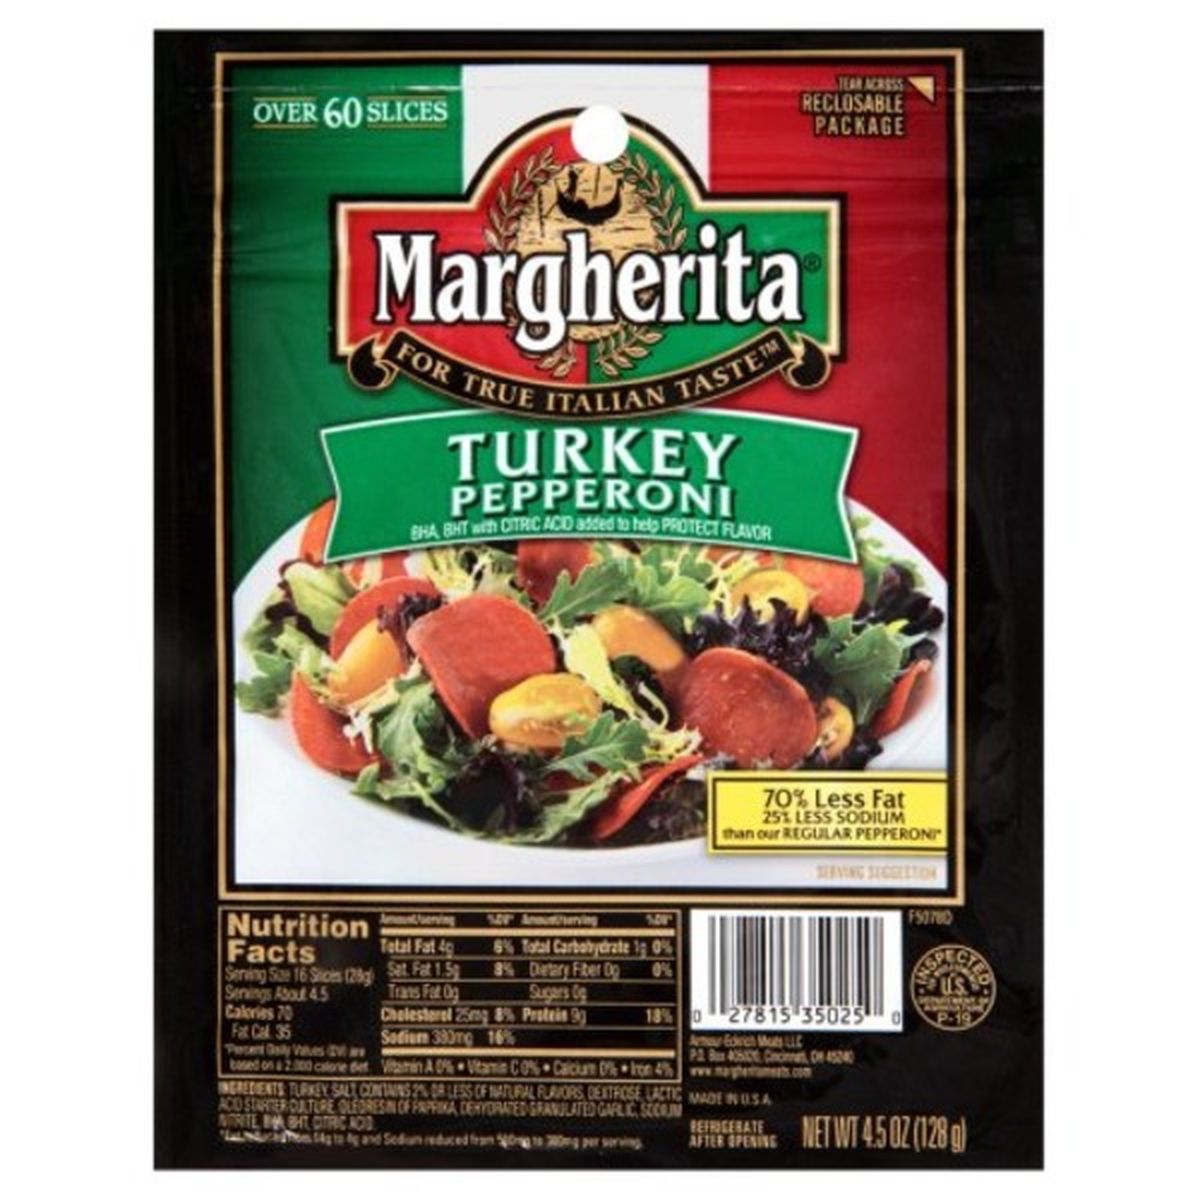 Calories in Margherita Pre-Sliced Turkey Pepperoni